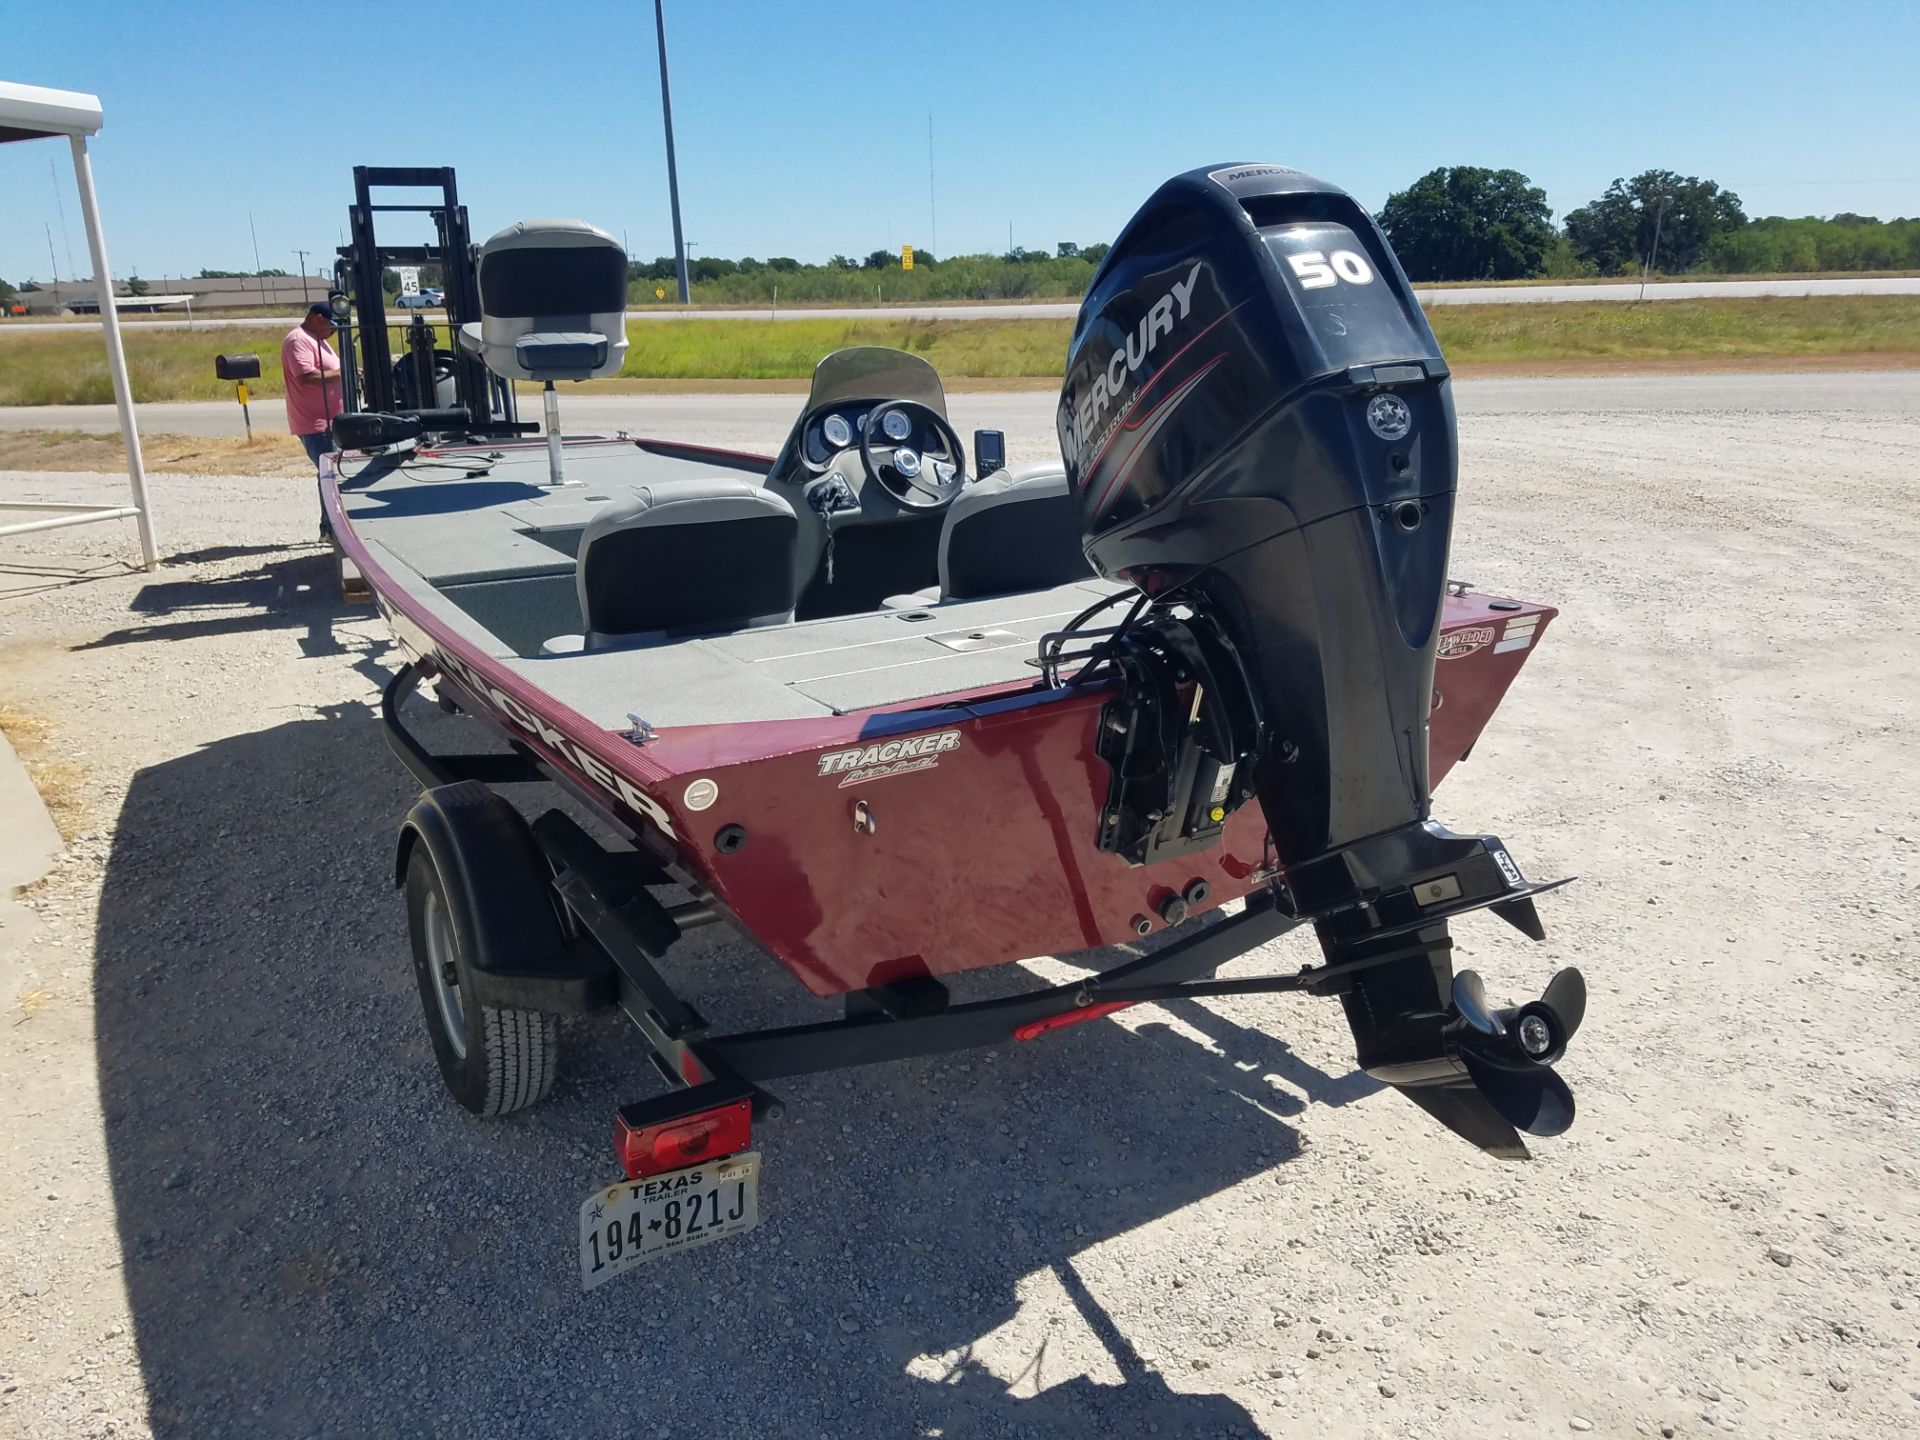 2017 Tracker Pro 170 in Eastland, Texas - Photo 4